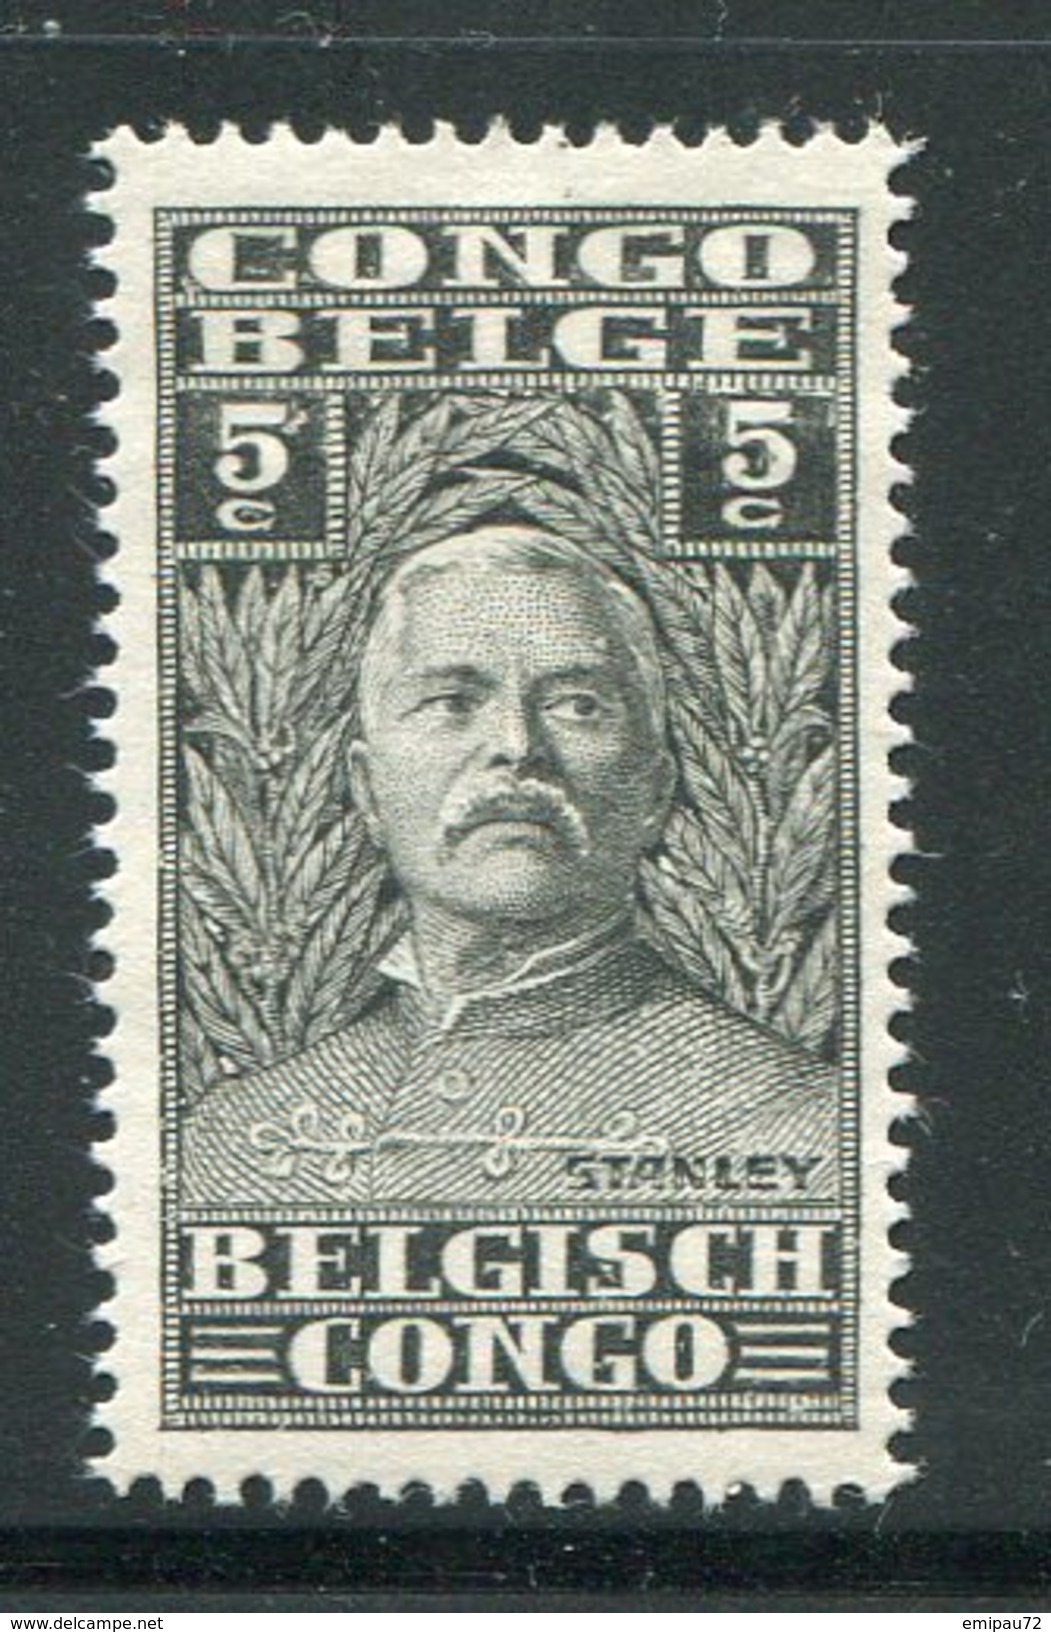 CONGO BELGE- Y&T N°135- Neuf Avec Charnière * - Unused Stamps